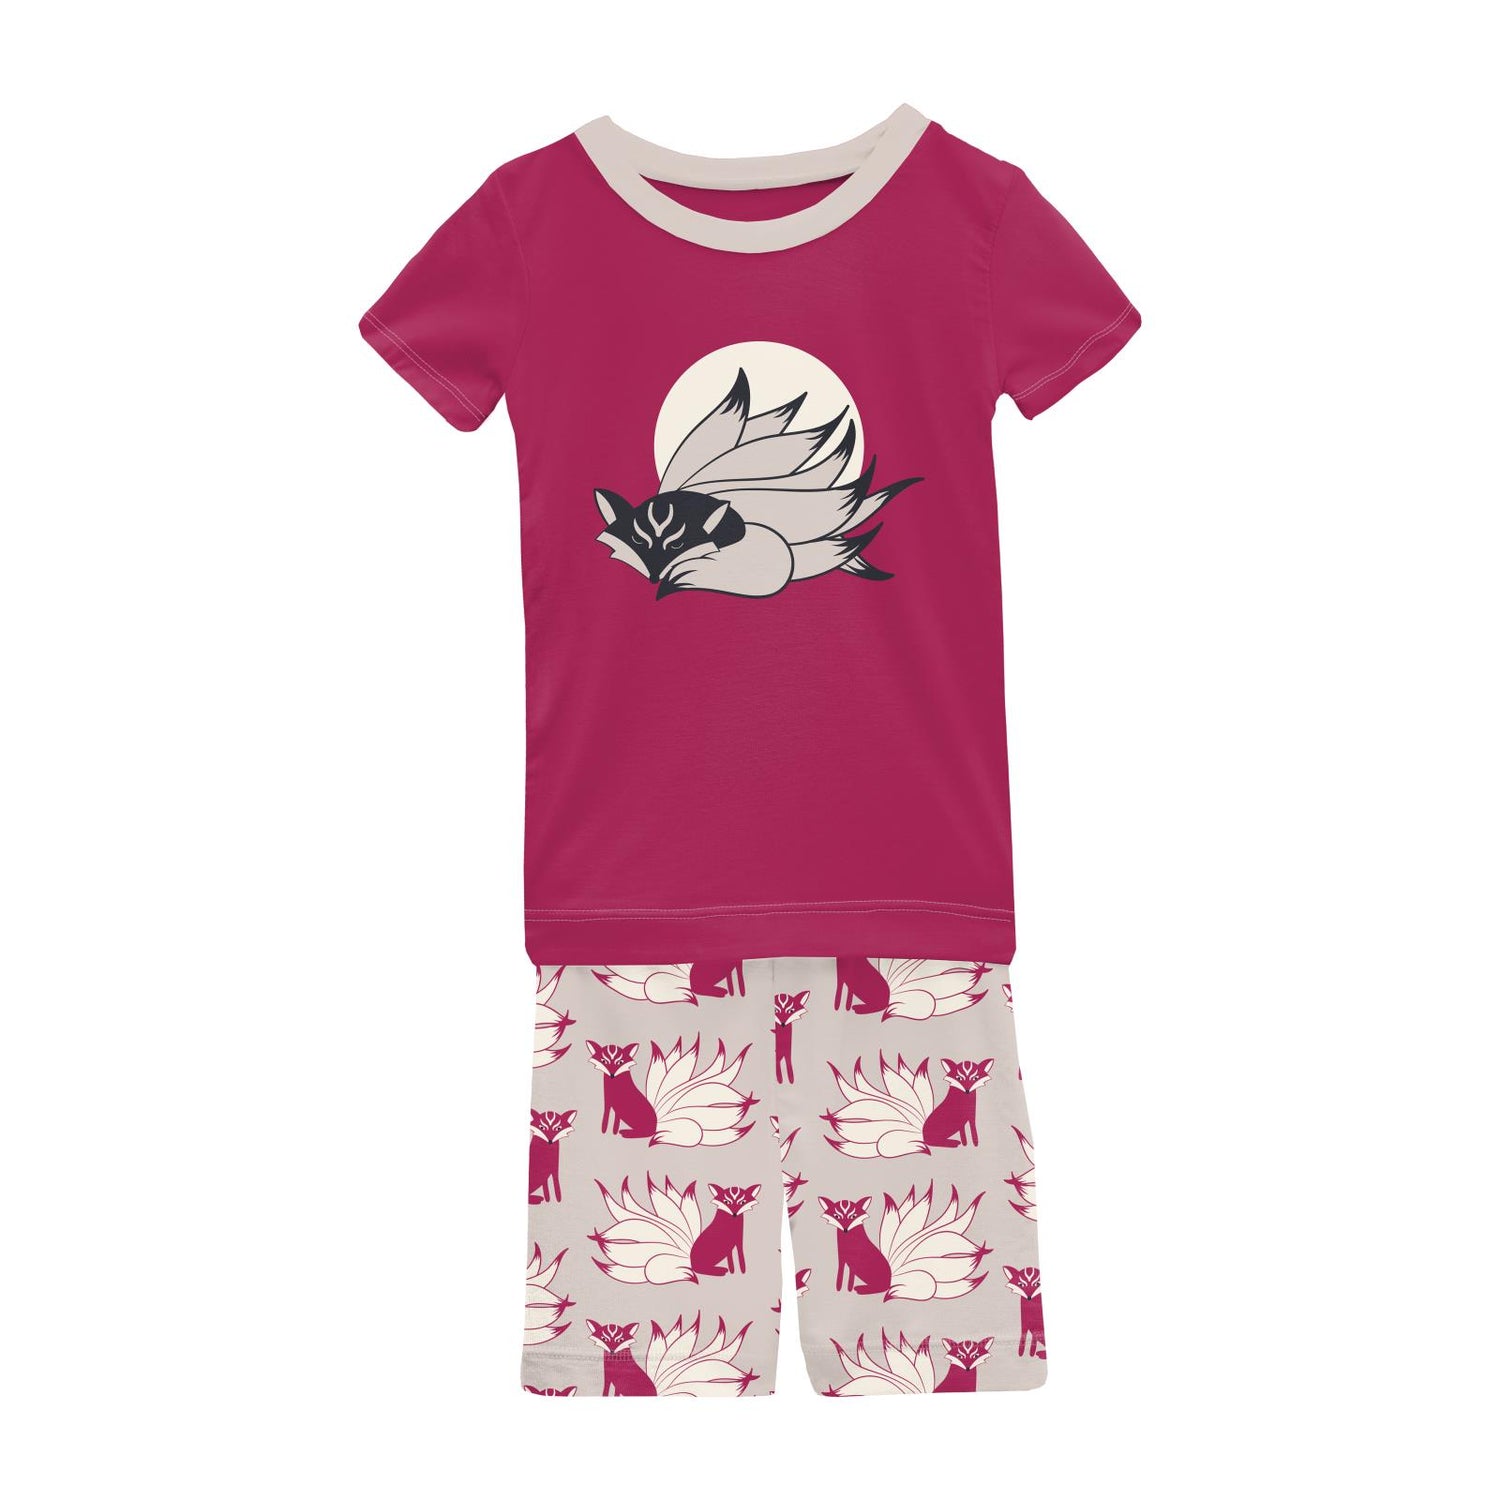 Short Sleeve Graphic Tee Pajama Set with Shorts in Latte Kitsune